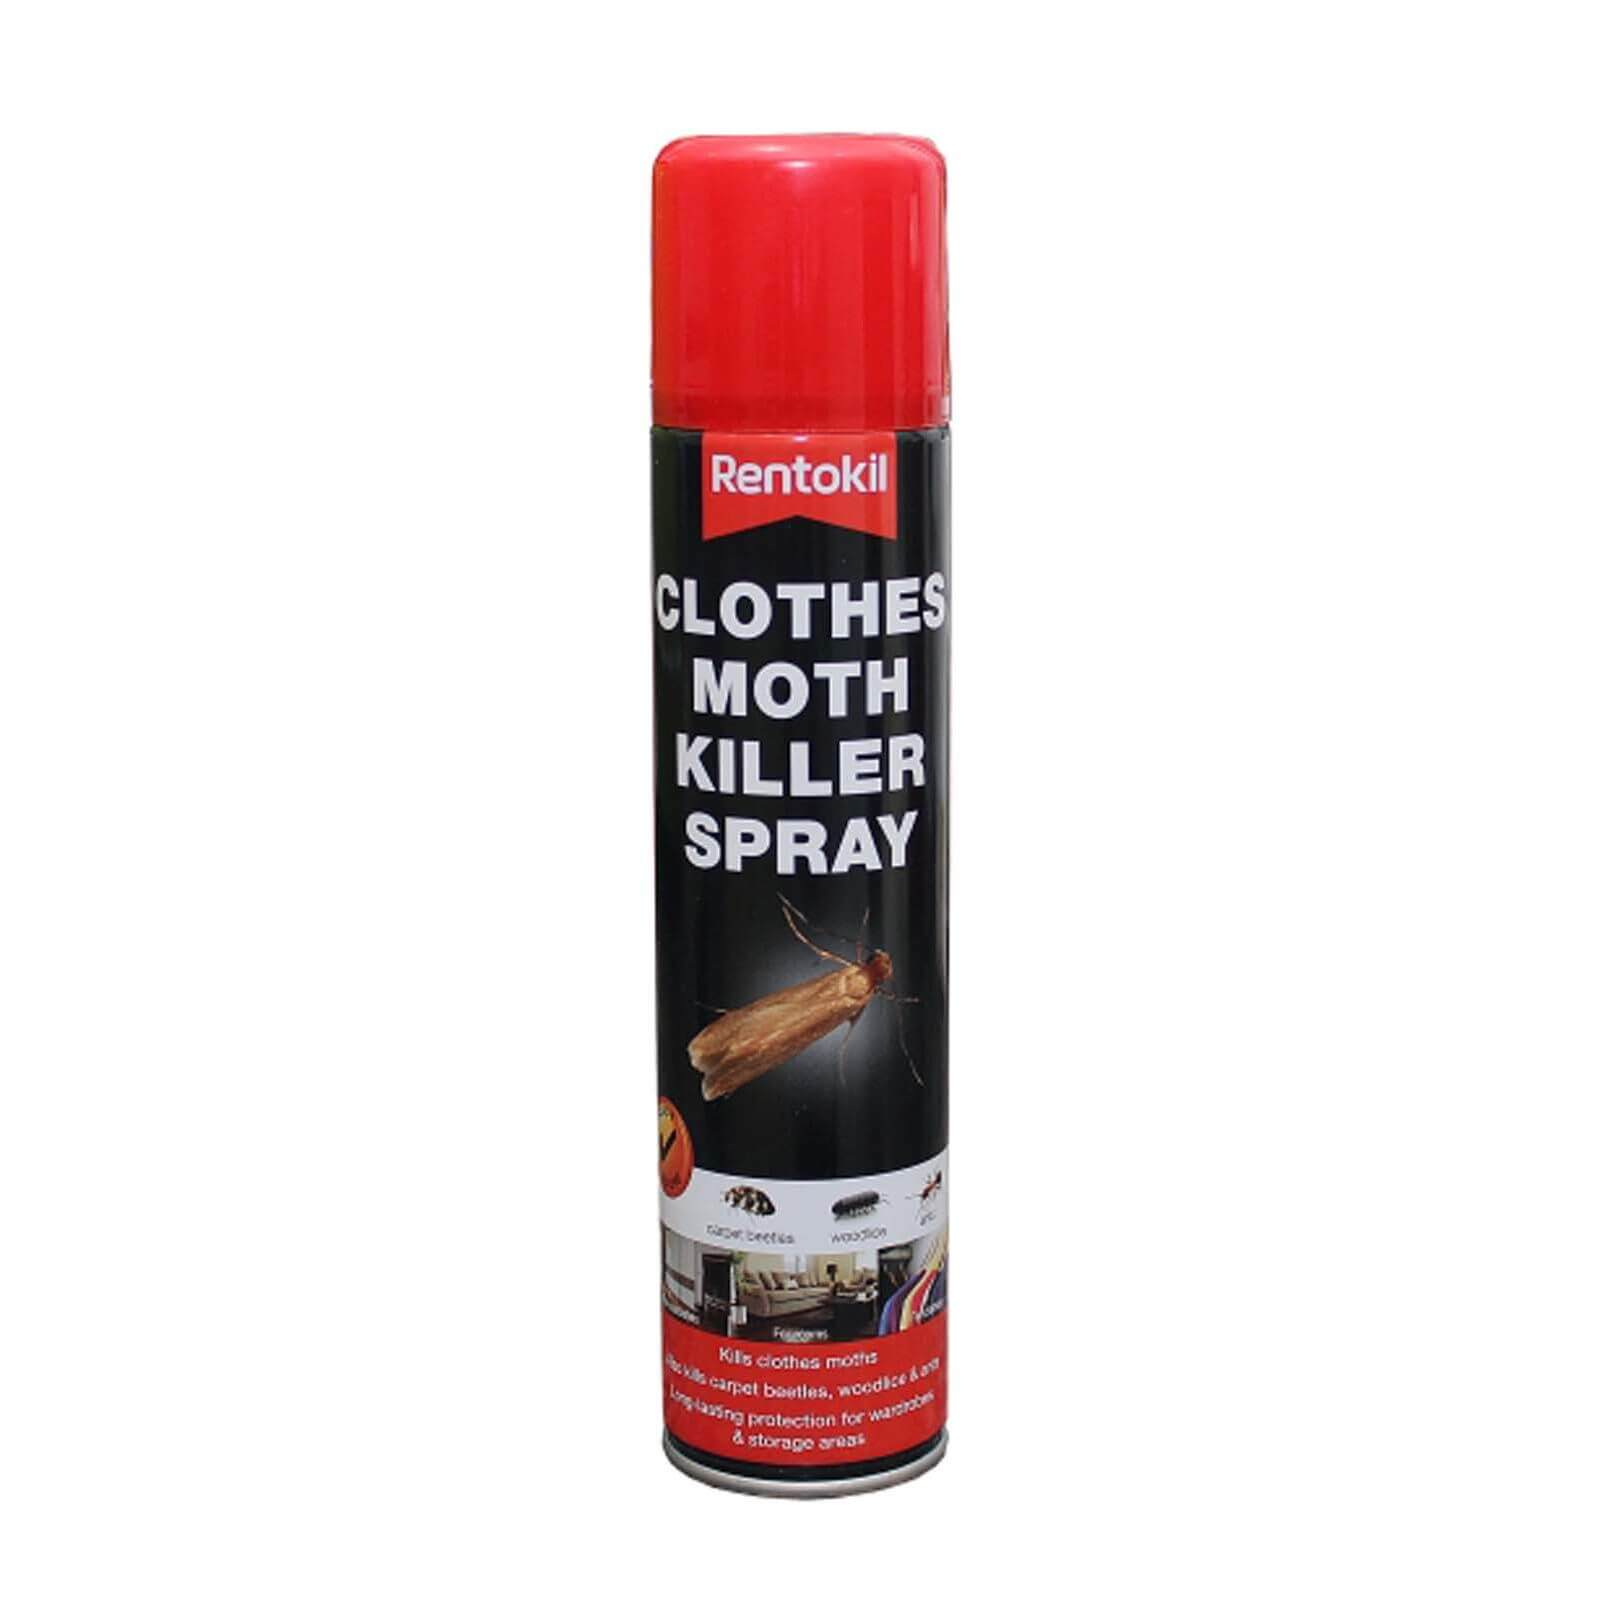 Rentokil Clothes Moth Killer Spray - 300ml